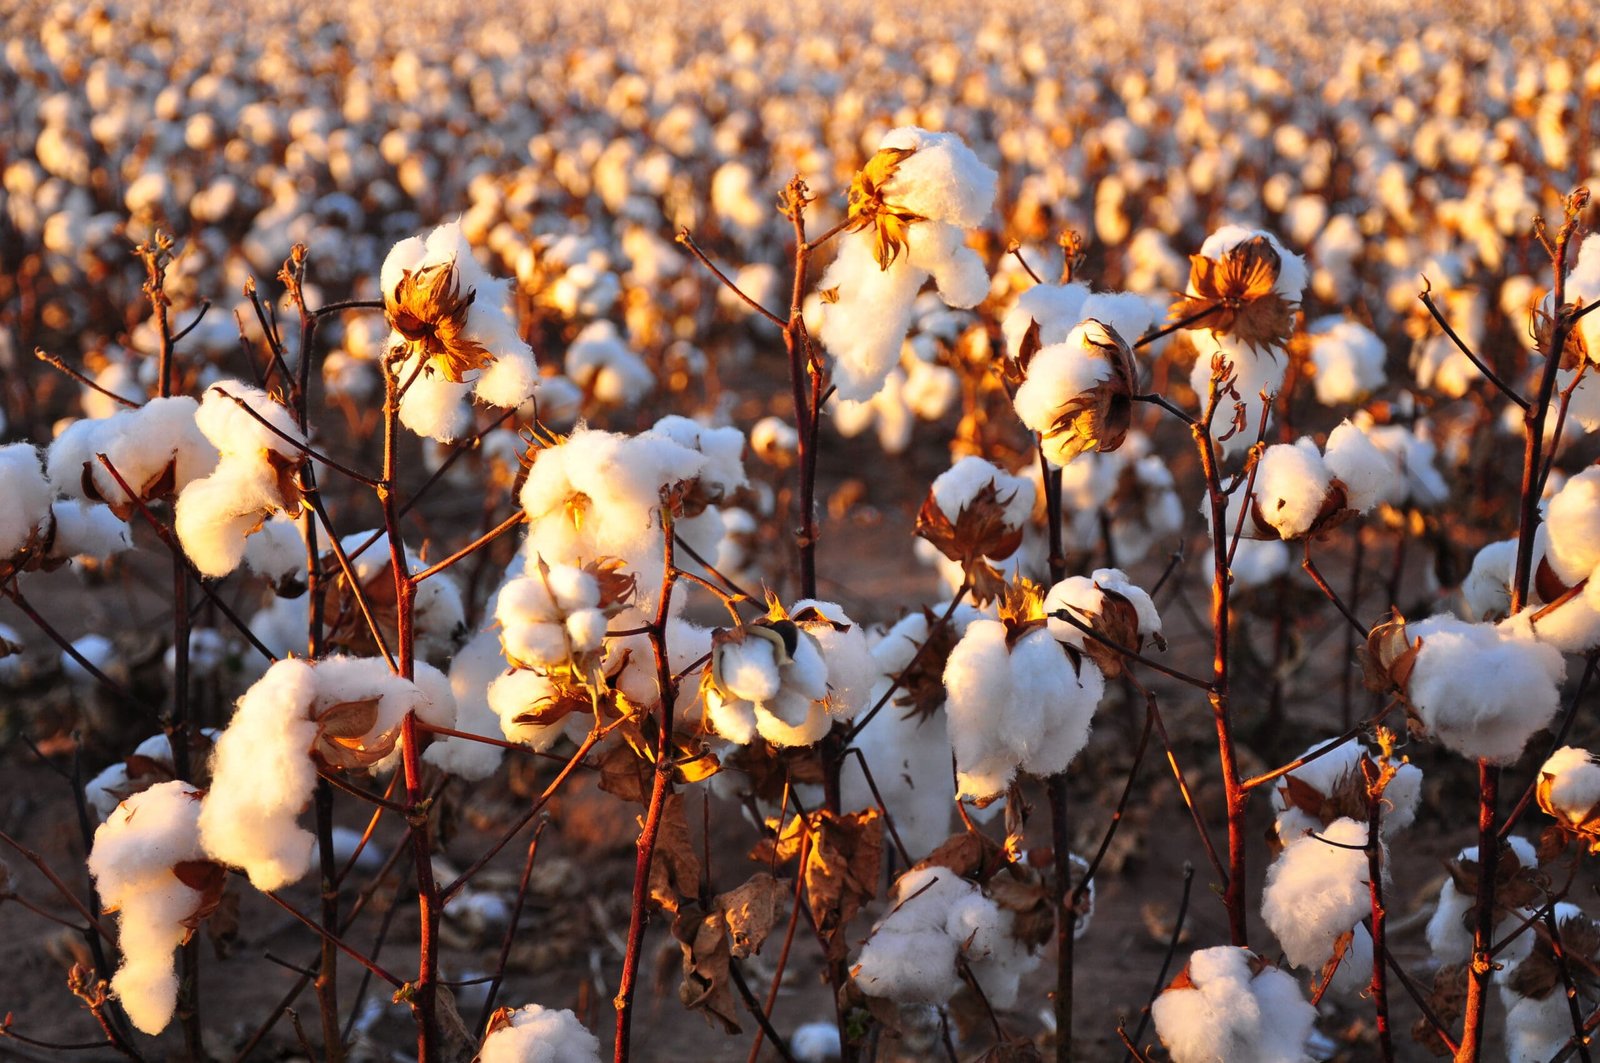 Haryana’s cotton acreage falls 90,000 hectares short of the objective